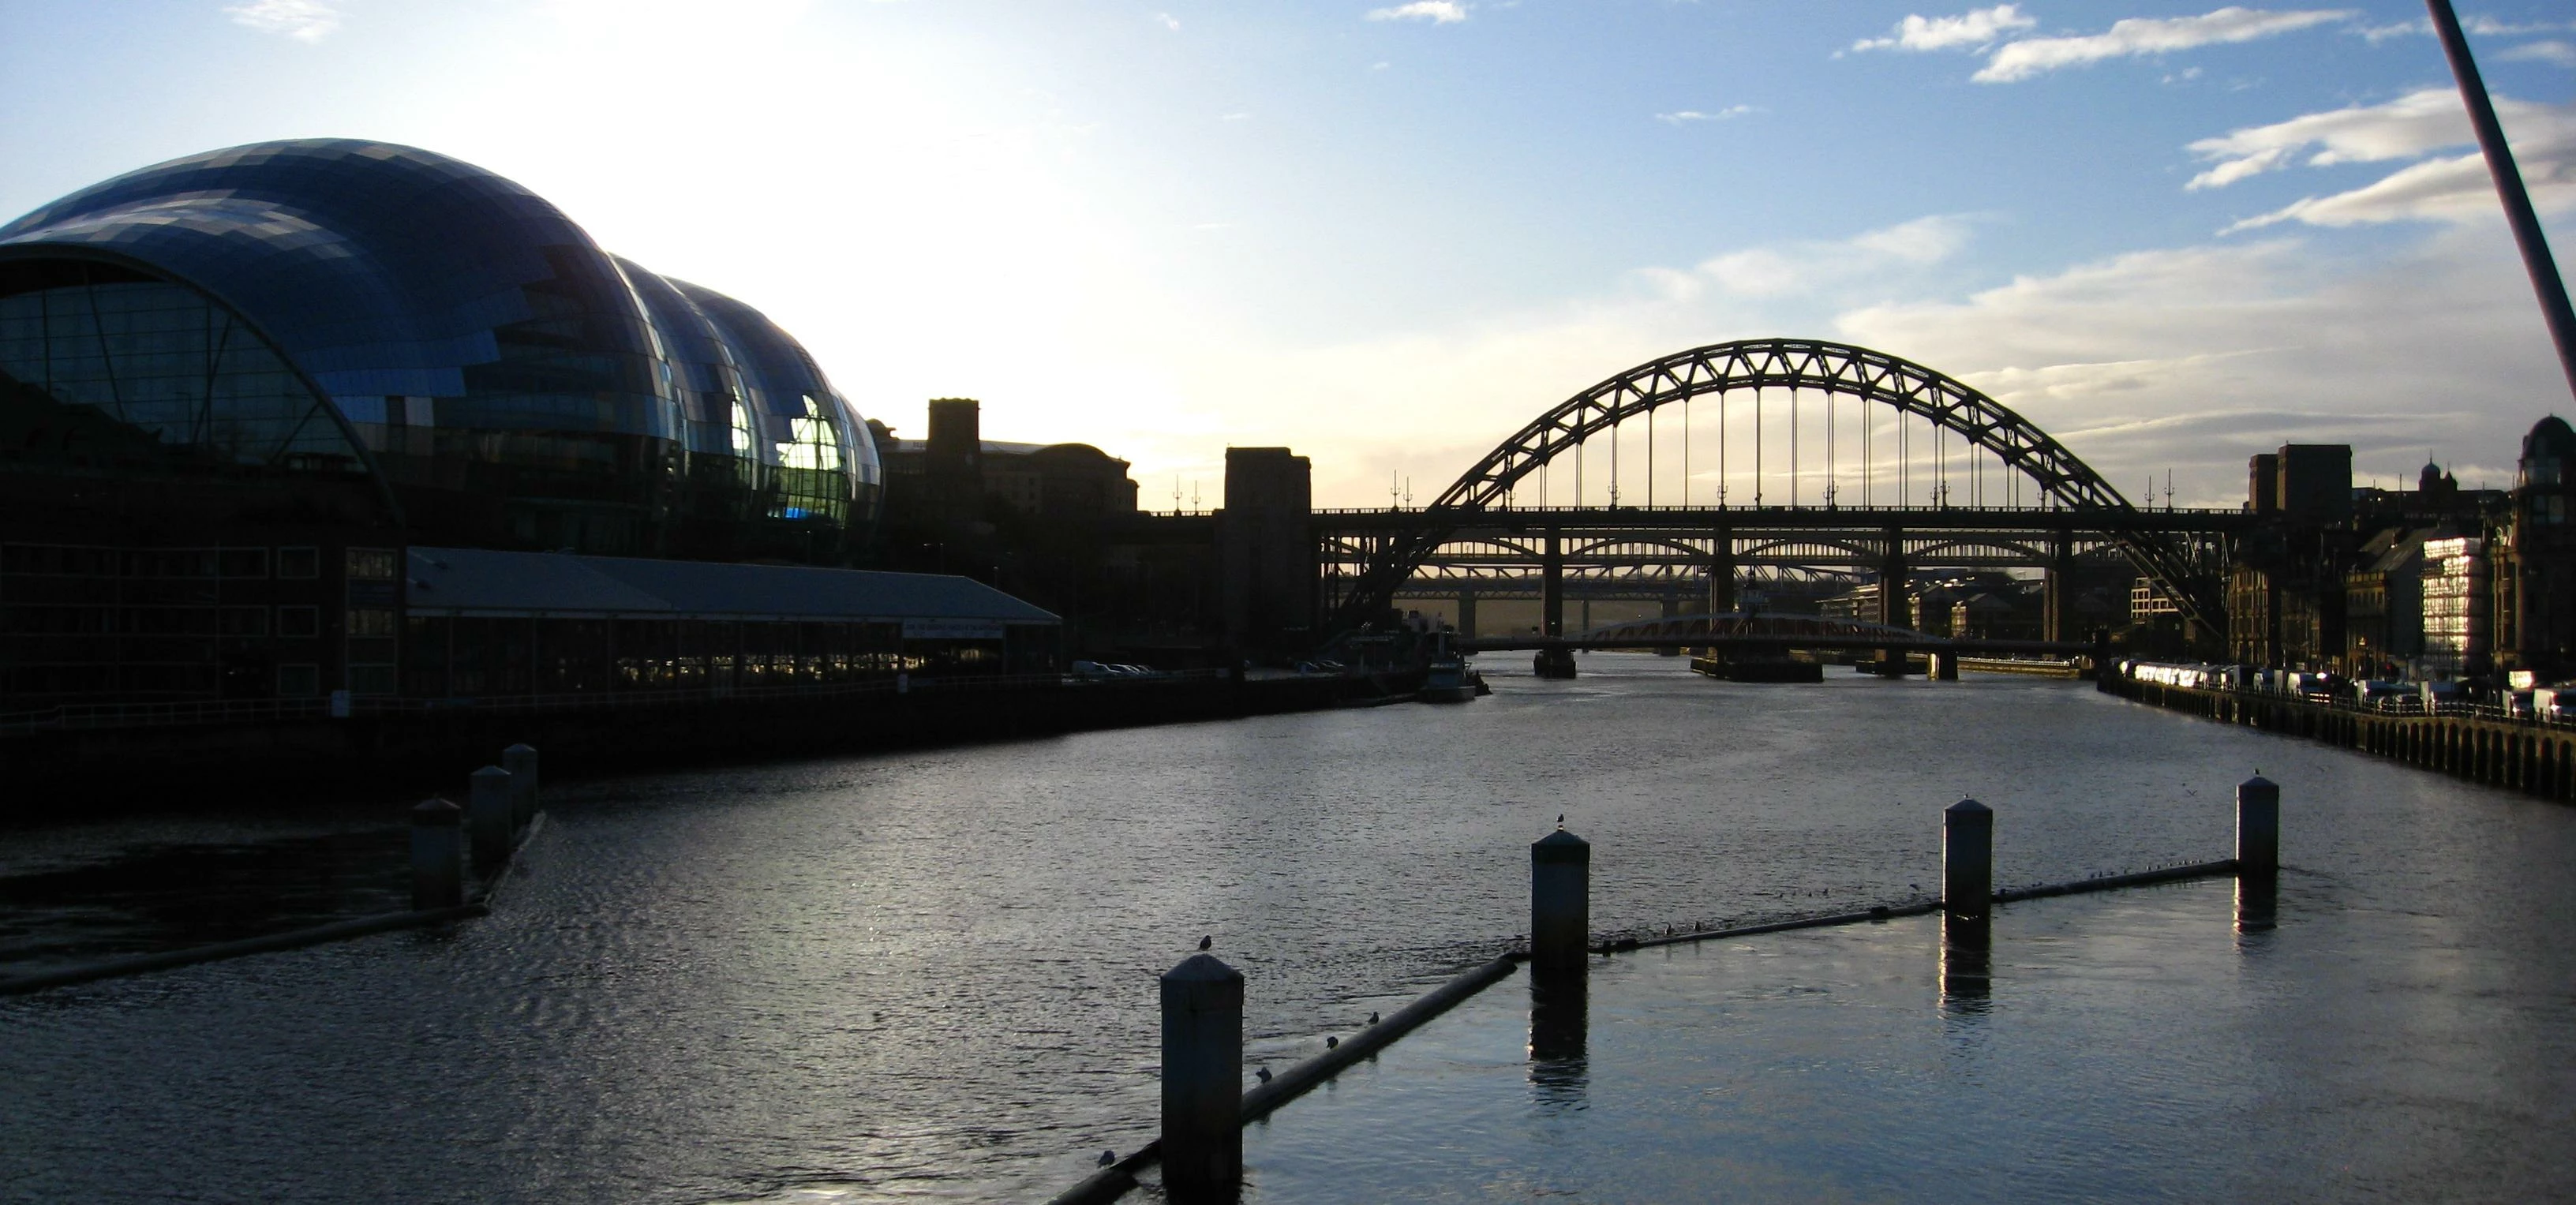 The Tyne Bridge and the Sage - Newcastle Gateshead Quayside